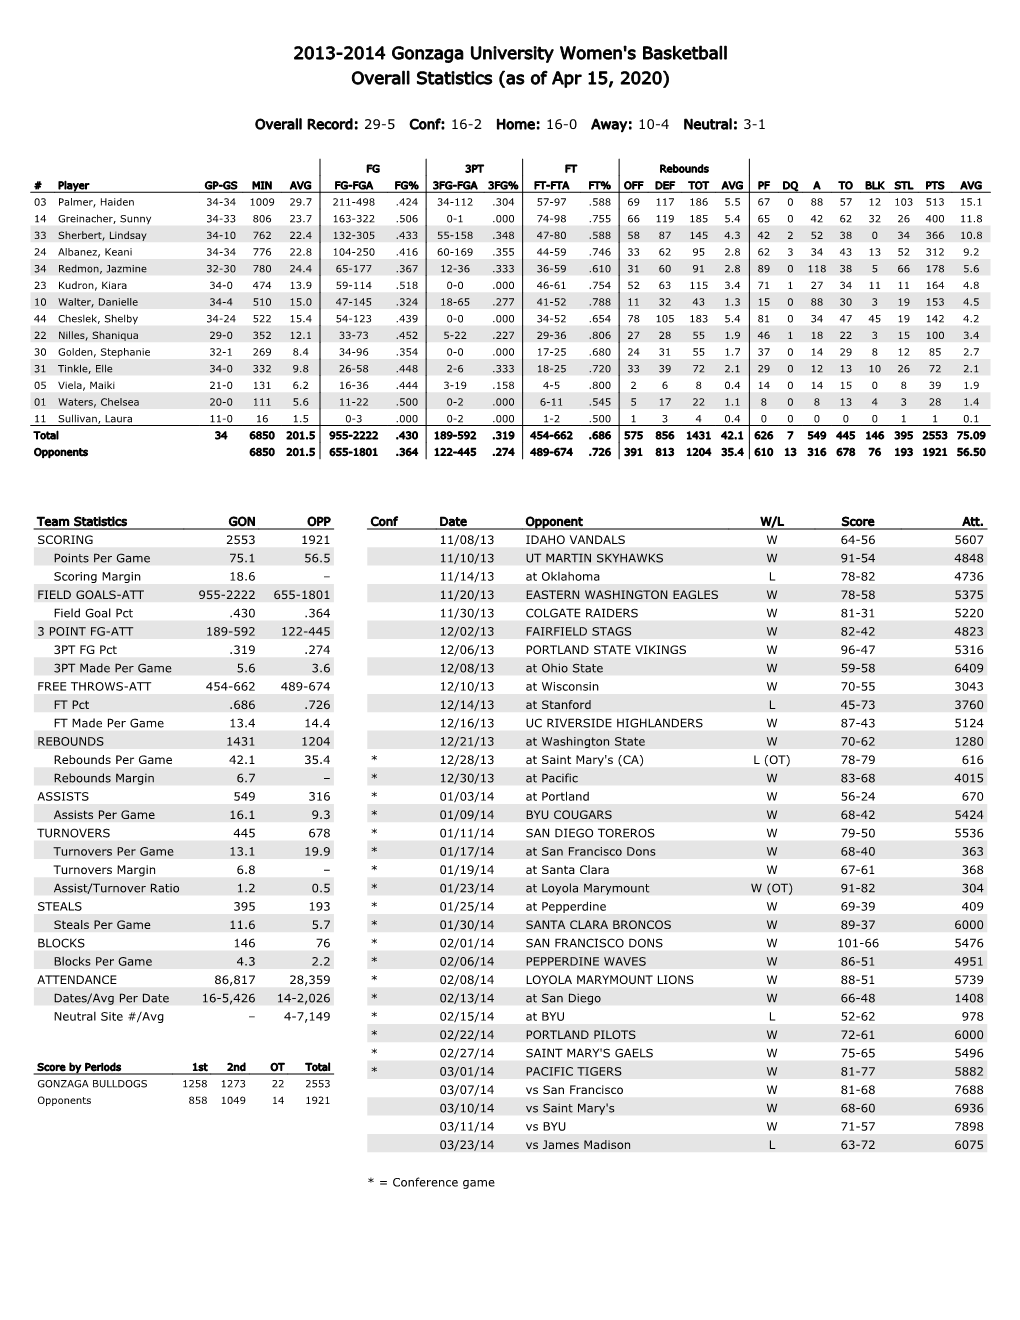 2013-2014 Gonzaga University Women's Basketball Overall Statistics (As of Apr 15, 2020)